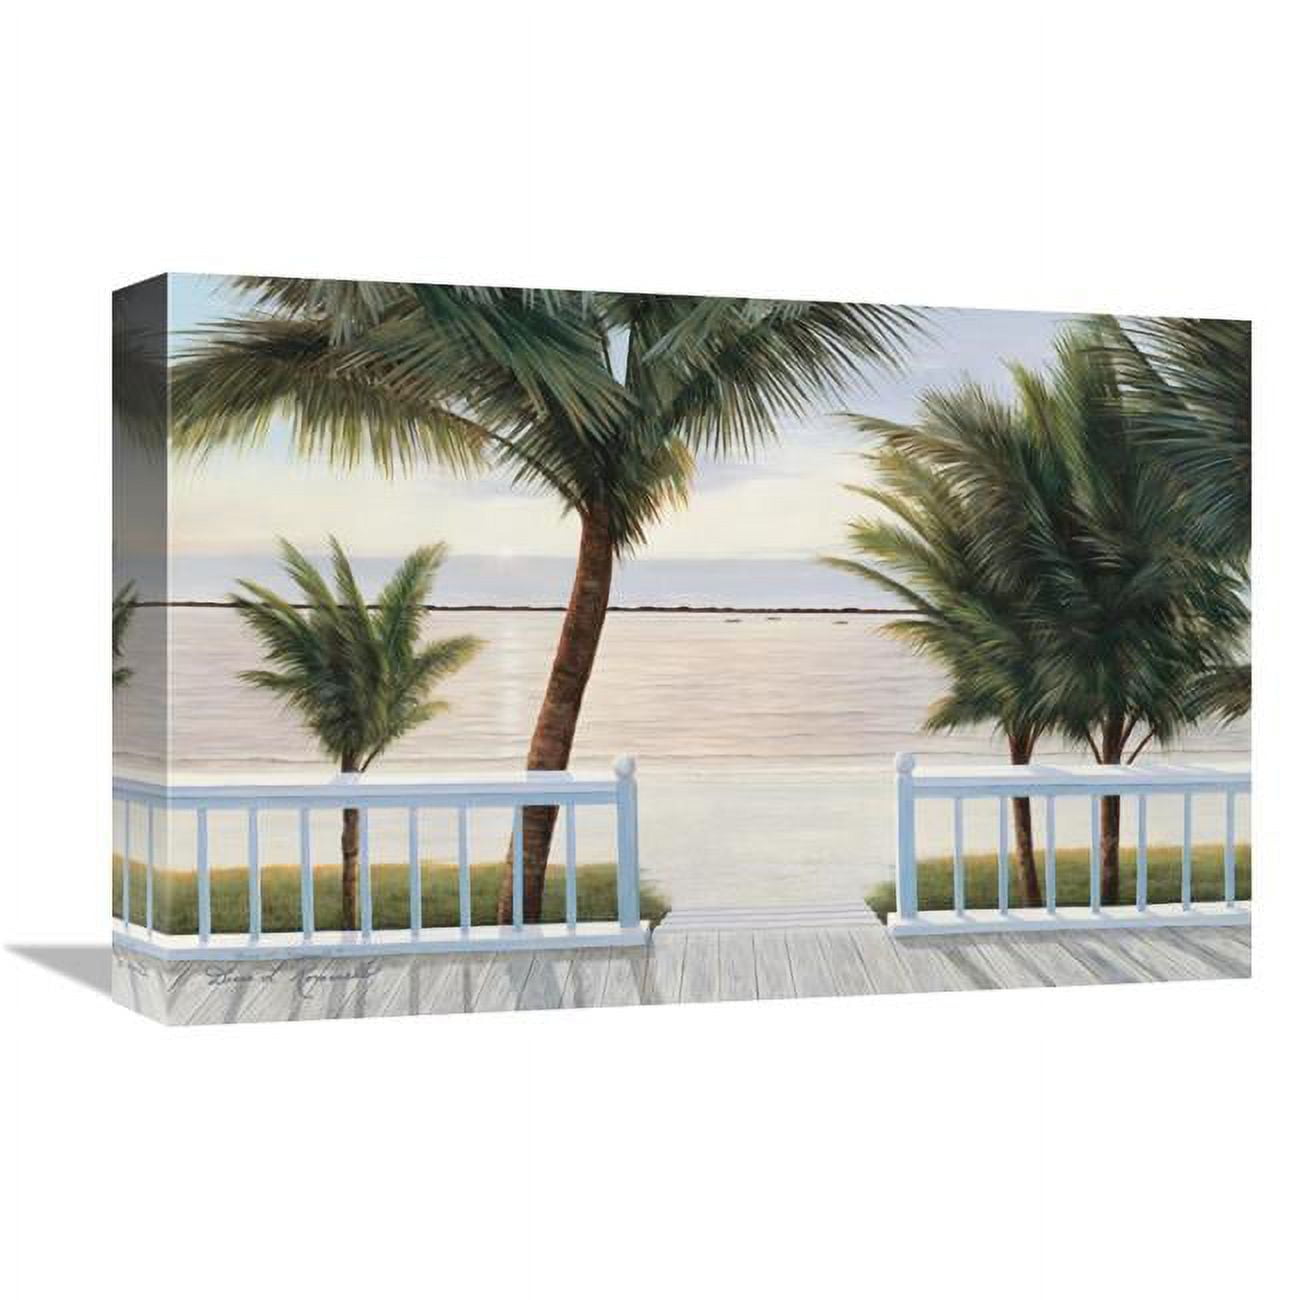 12 x 18 in. Palm Bay Art Print - Diane Romanello -  JensenDistributionServices, MI1268576